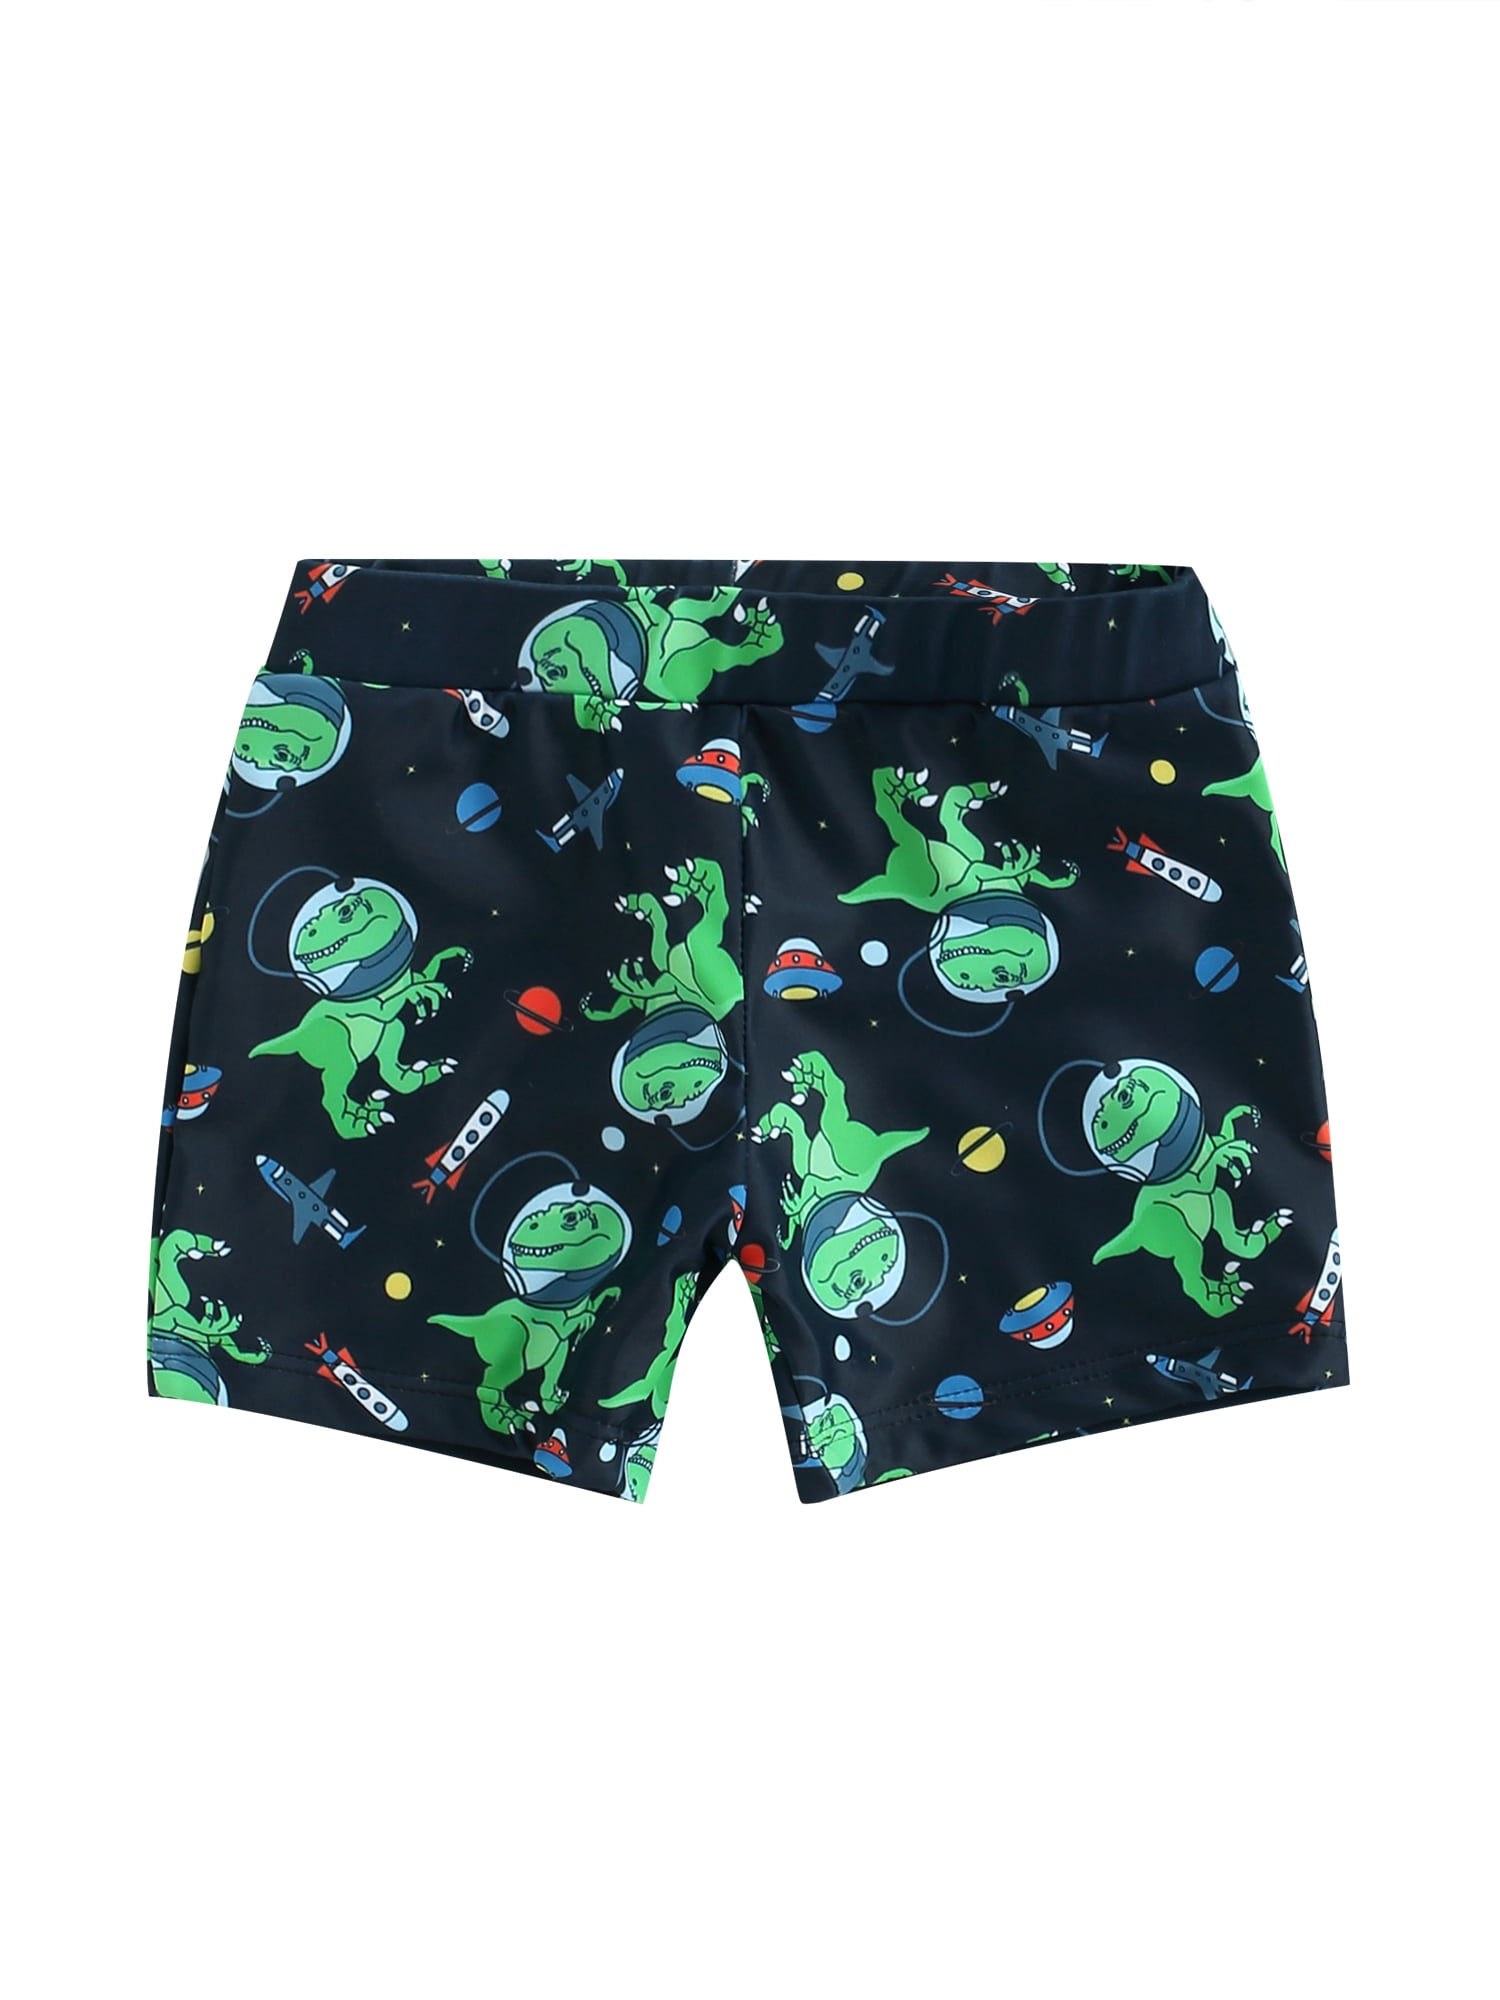 Makachen Boys Shark Swim Trunks Quick Dry Kids Board Shorts for Beach Drawstring Funny Swimsuit with Mesh Lining 